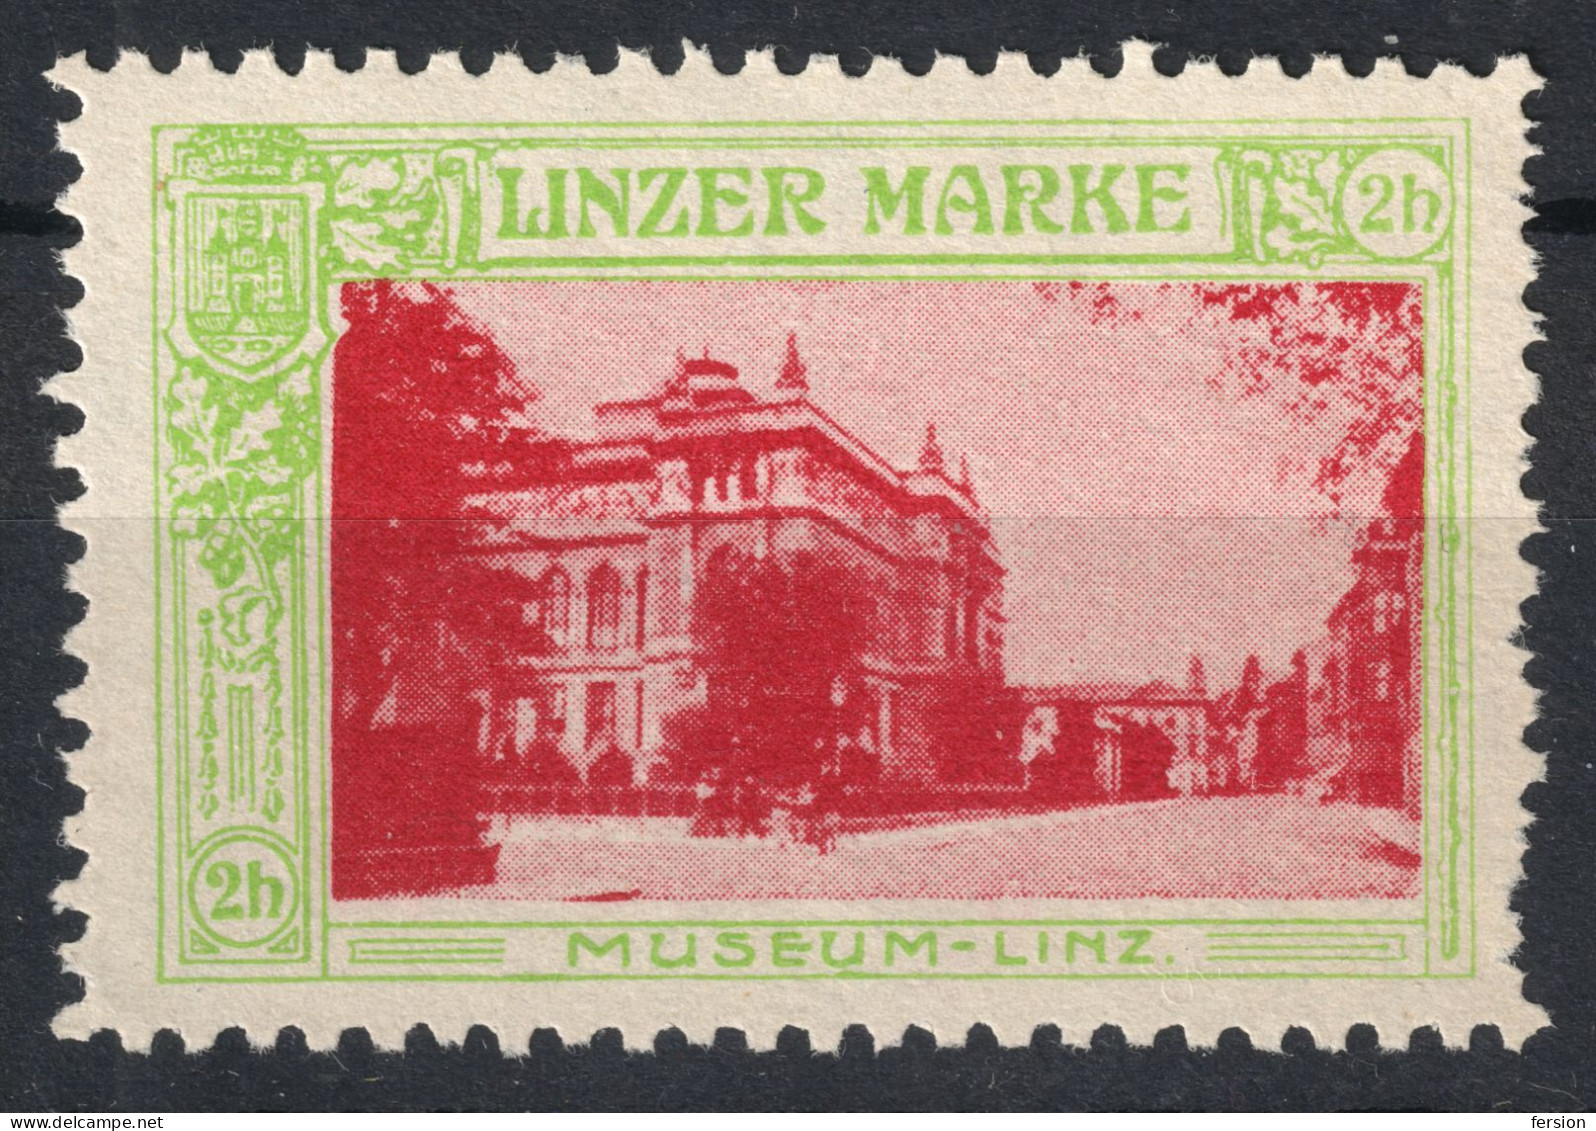 Museums MUSEUM - City LINZ 1910 Austria Charity Label Cinderella Vignette / LINZER MARKE - Museums